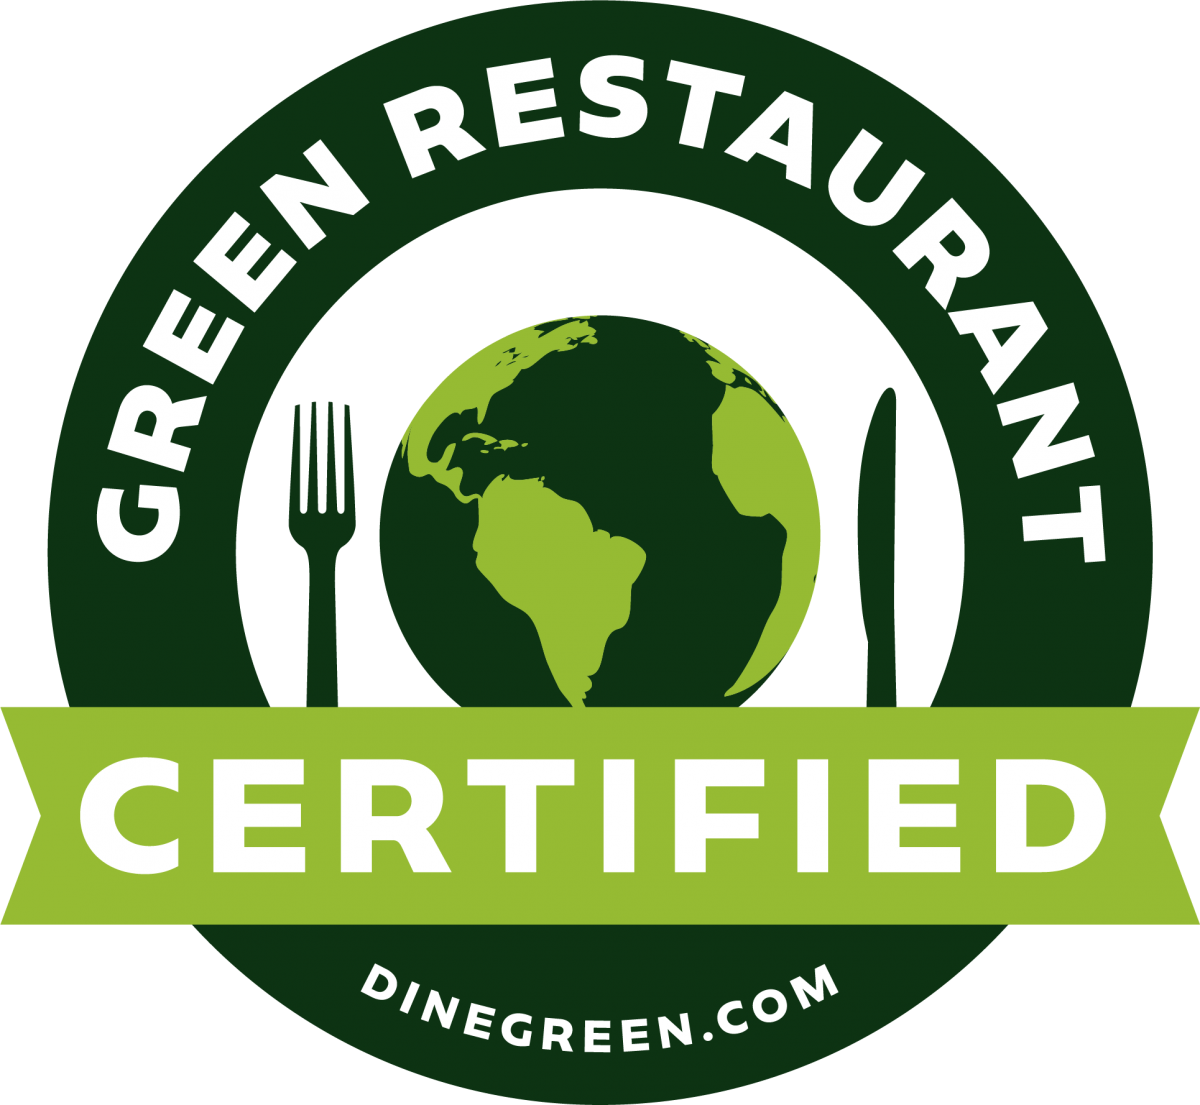 Logo reading "Green Restaurant Certified"